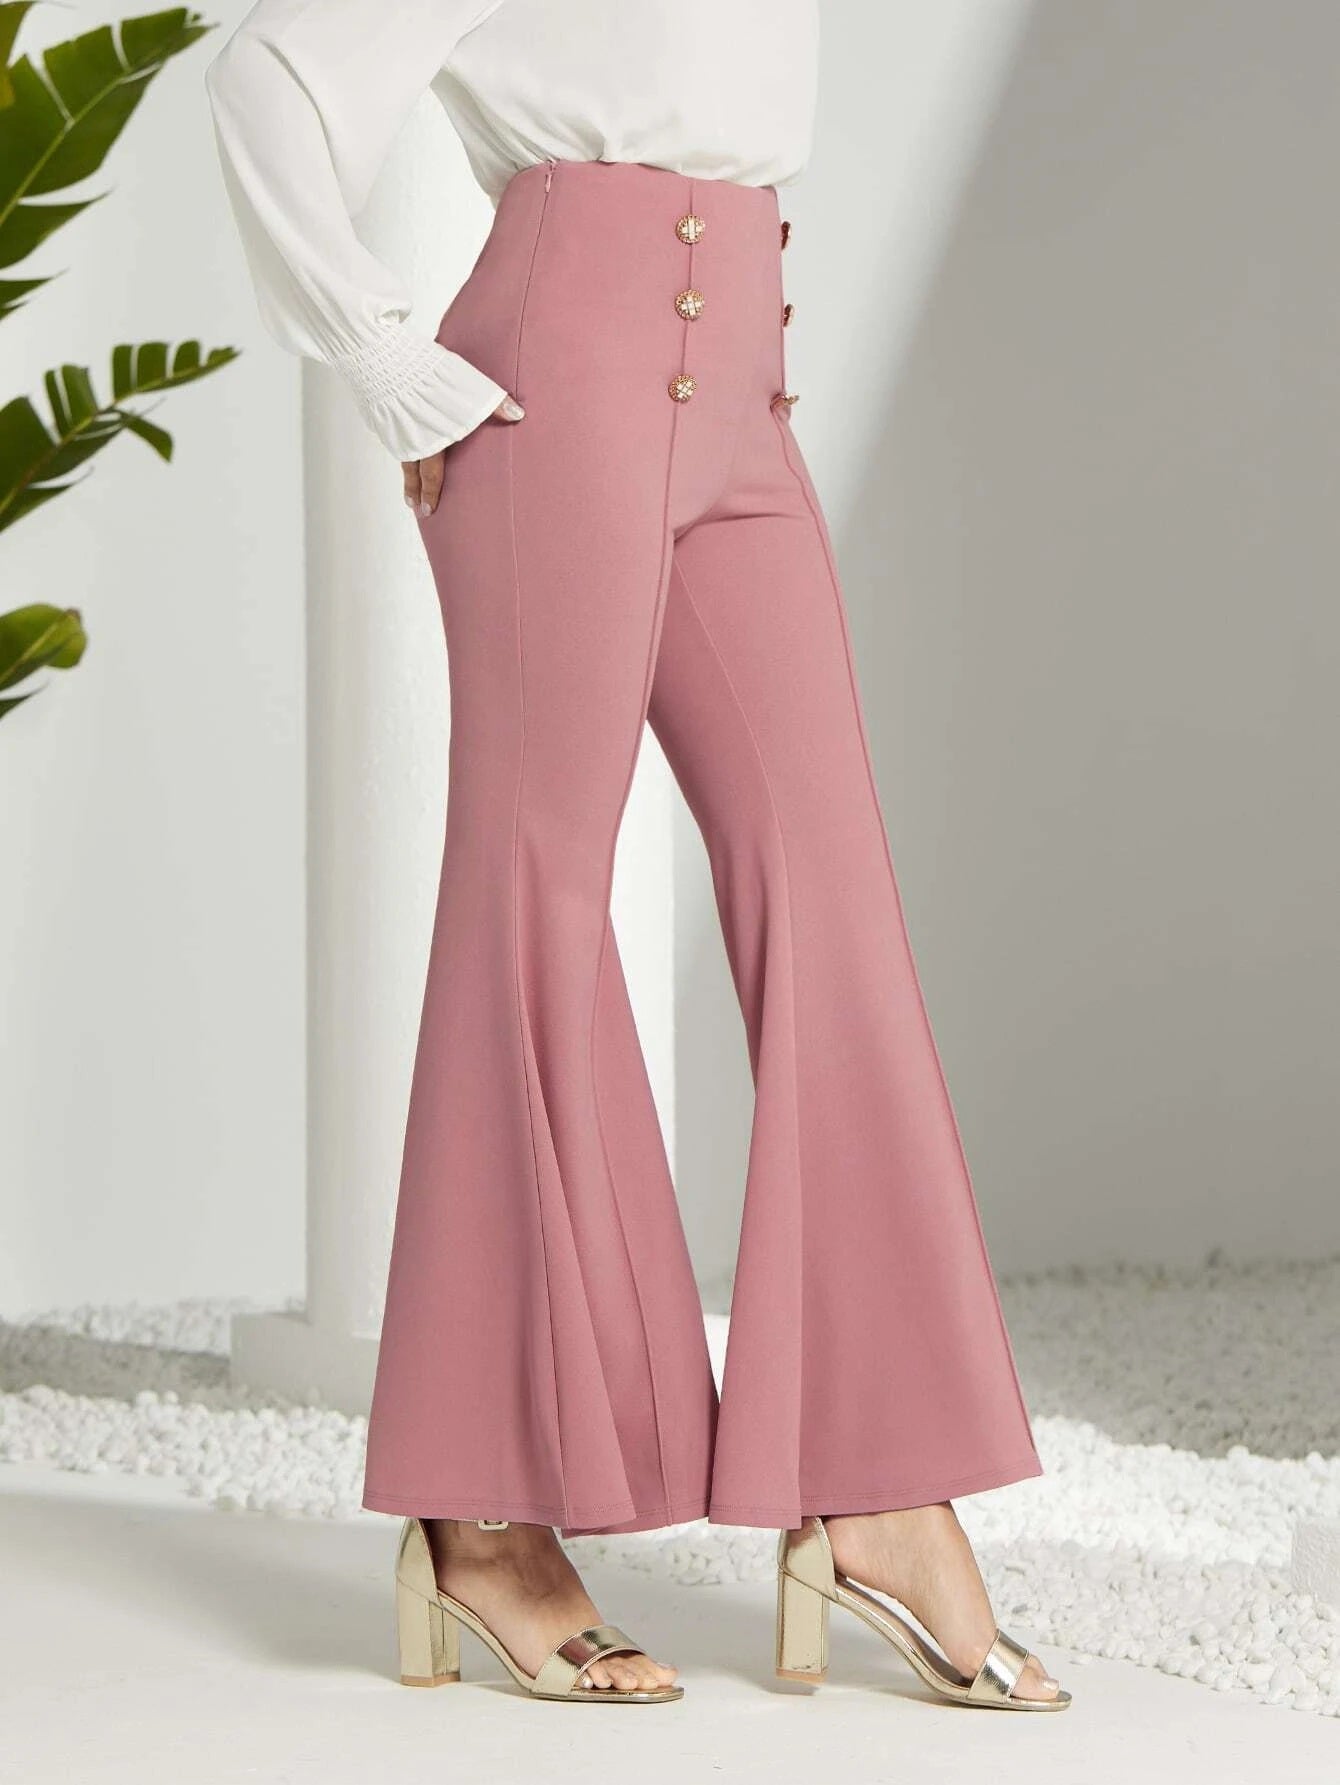 CM-BS437860 Women Elegant Seoul Style High Waist Button Detail Flare Leg Pants - Dusty Pink